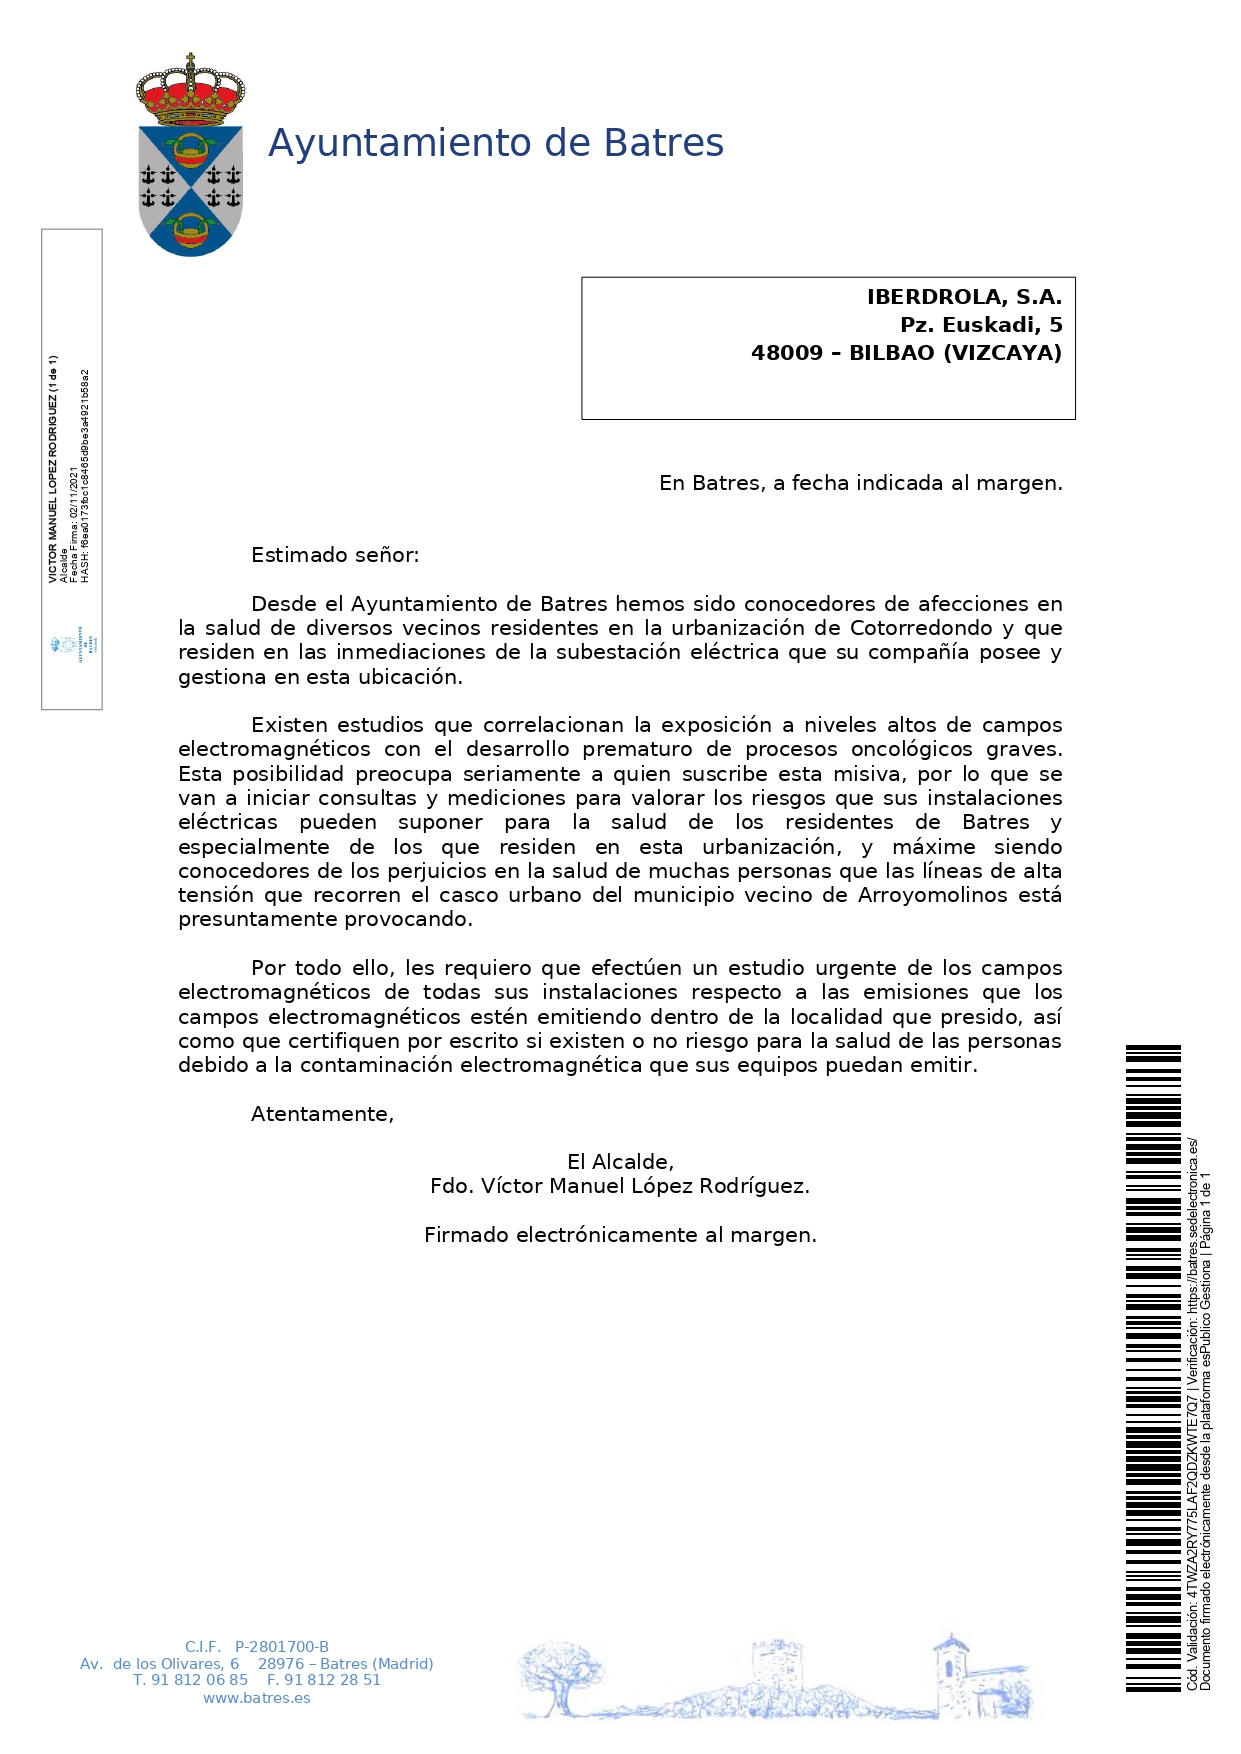 20211102 Comunicacin Carta Carta a Iberdrola page 0001